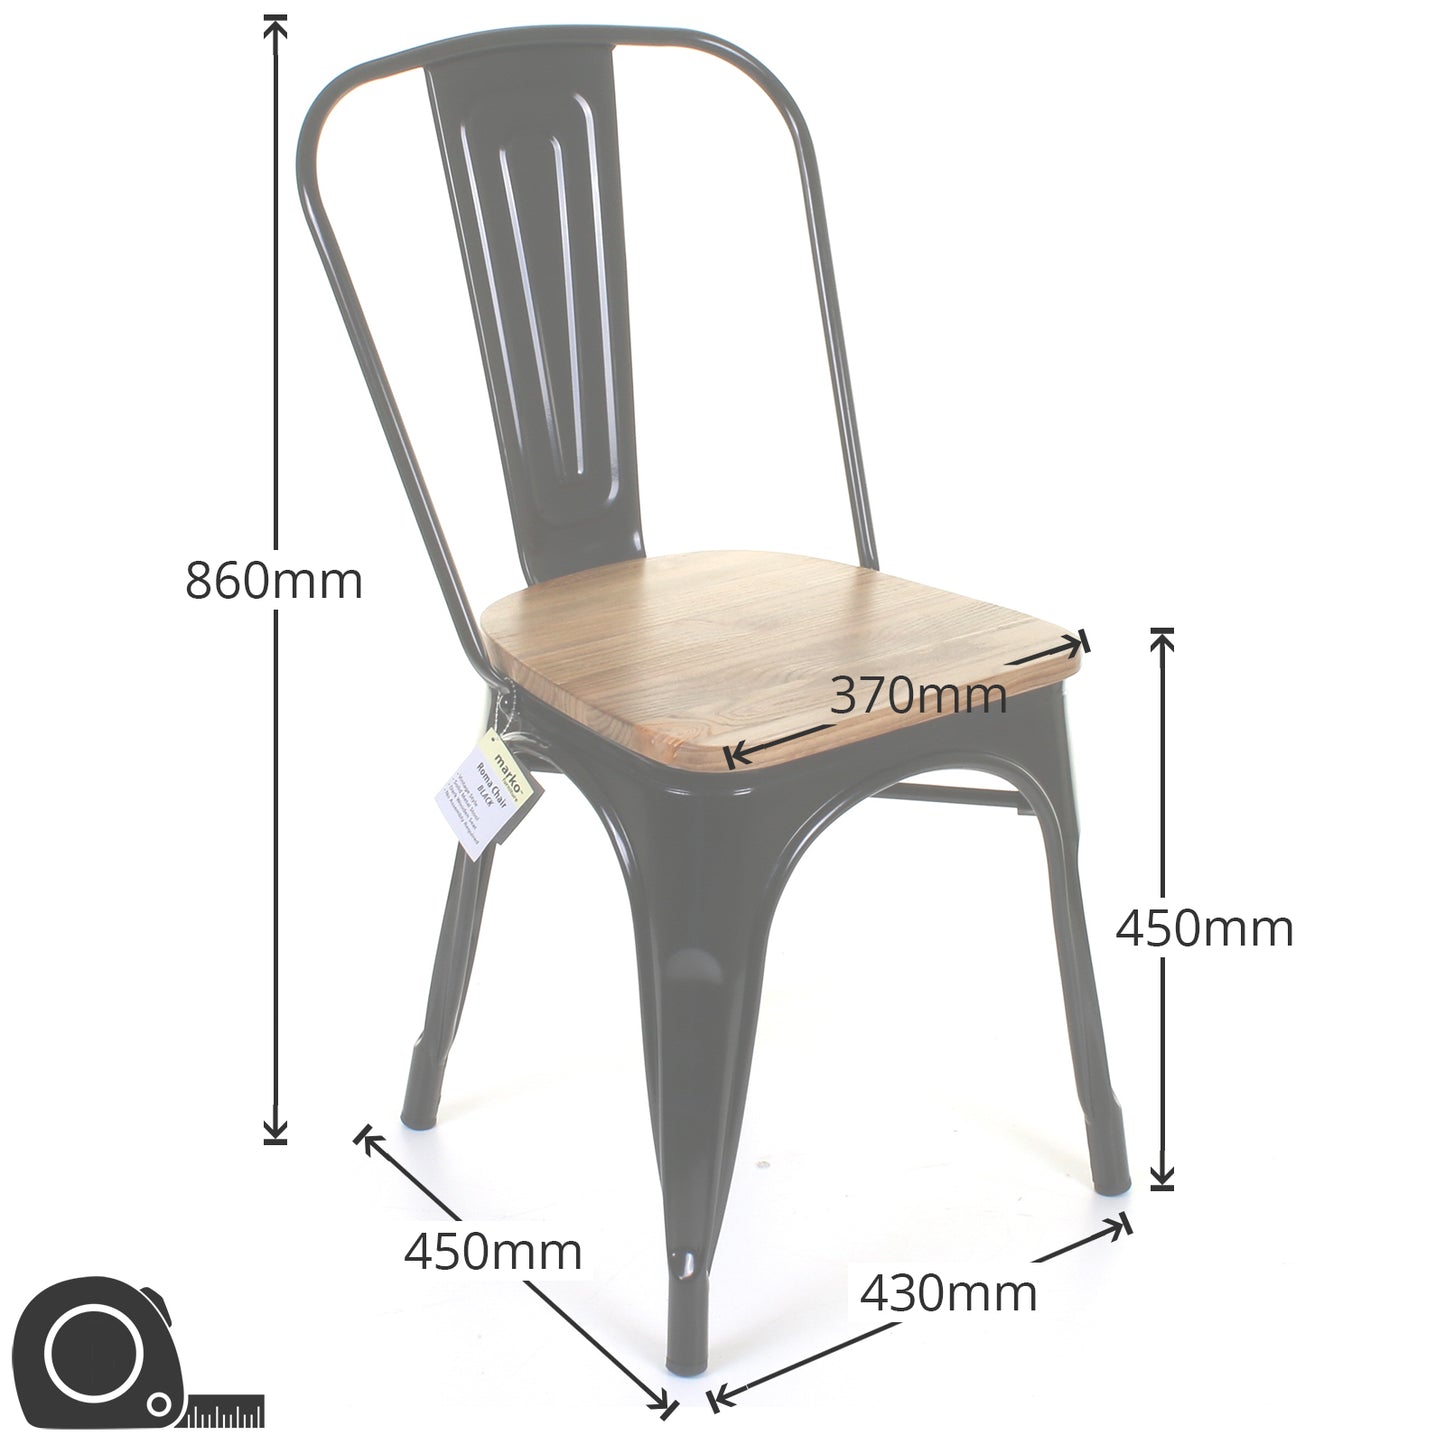 5PC Prato Table & 4 Palermo Chairs Set - Steel